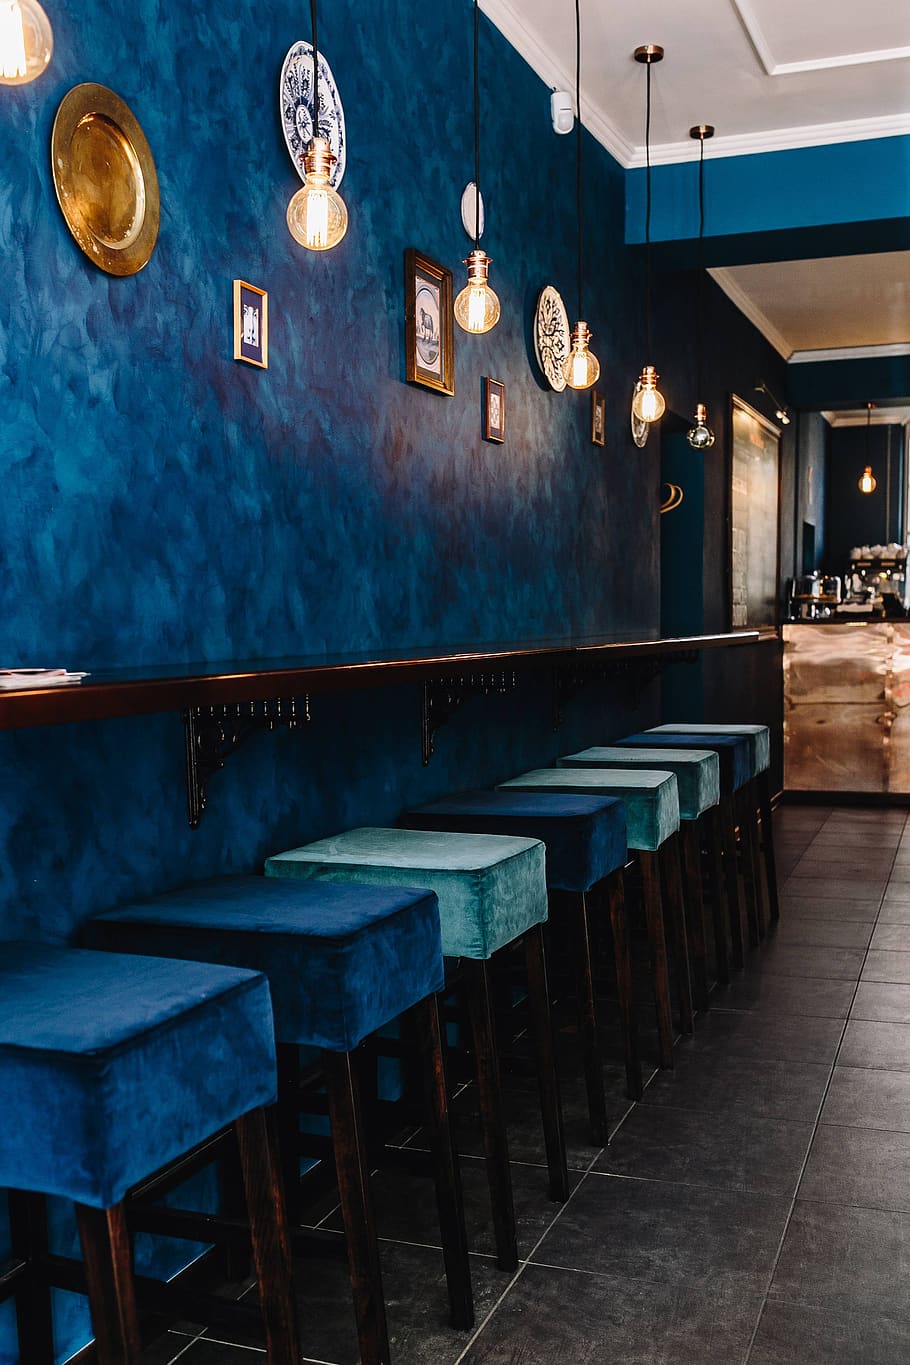 furnitur, kafe, restoran, biru, bar, dalam ruangan, biru tua, Interior, modern, kursi